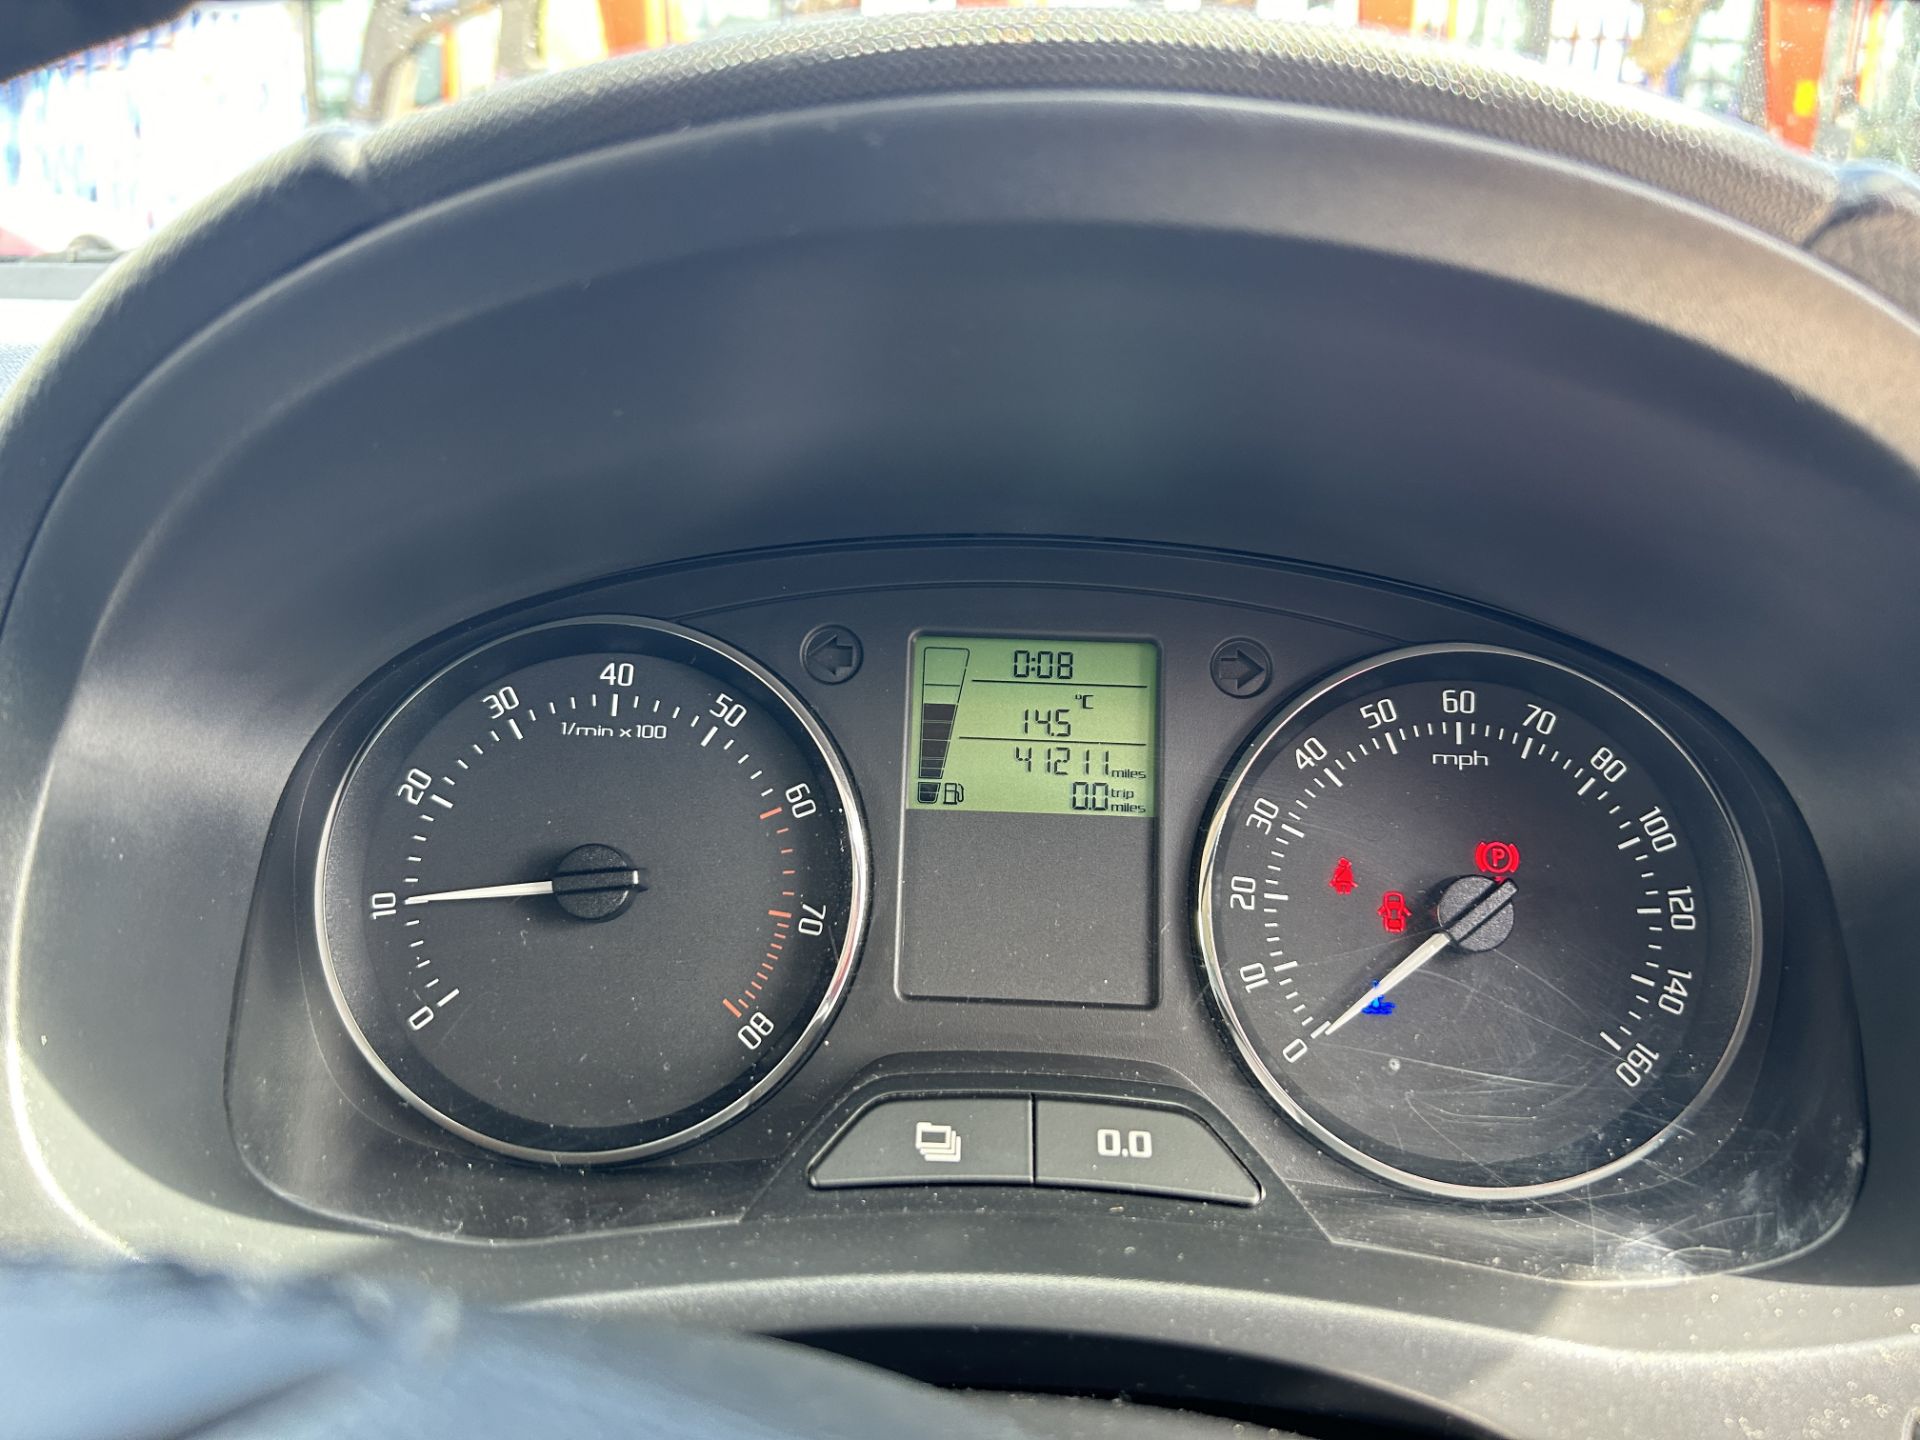 Skoda Fabia SE Plus TSI 85 Petrol 5 Door Hatchback | FT61 RLU | 41,211 Miles - Image 12 of 12